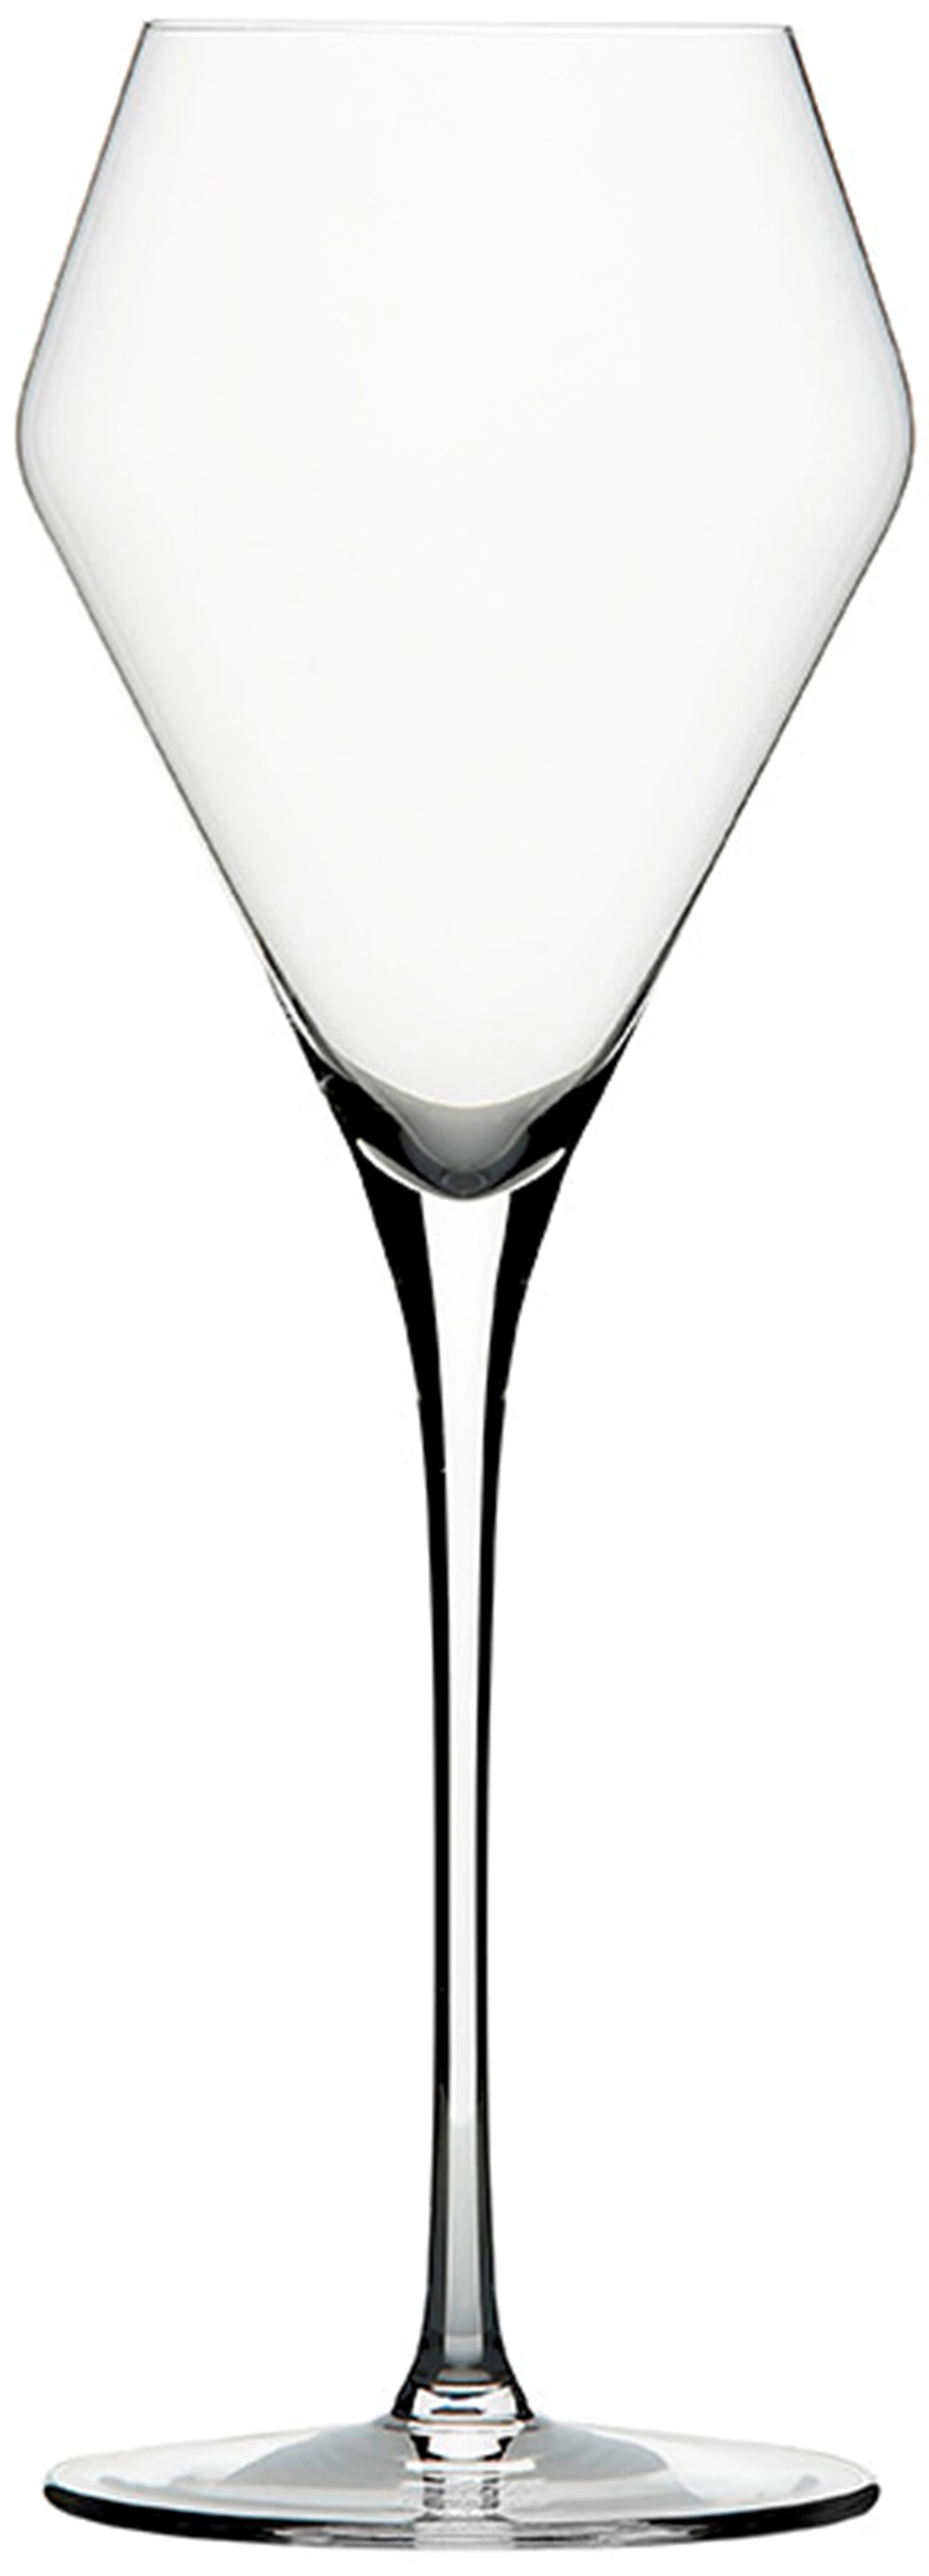 Løgismose Grej Zalto Glasperfektion Glas til søde vine  6 stk - 127369